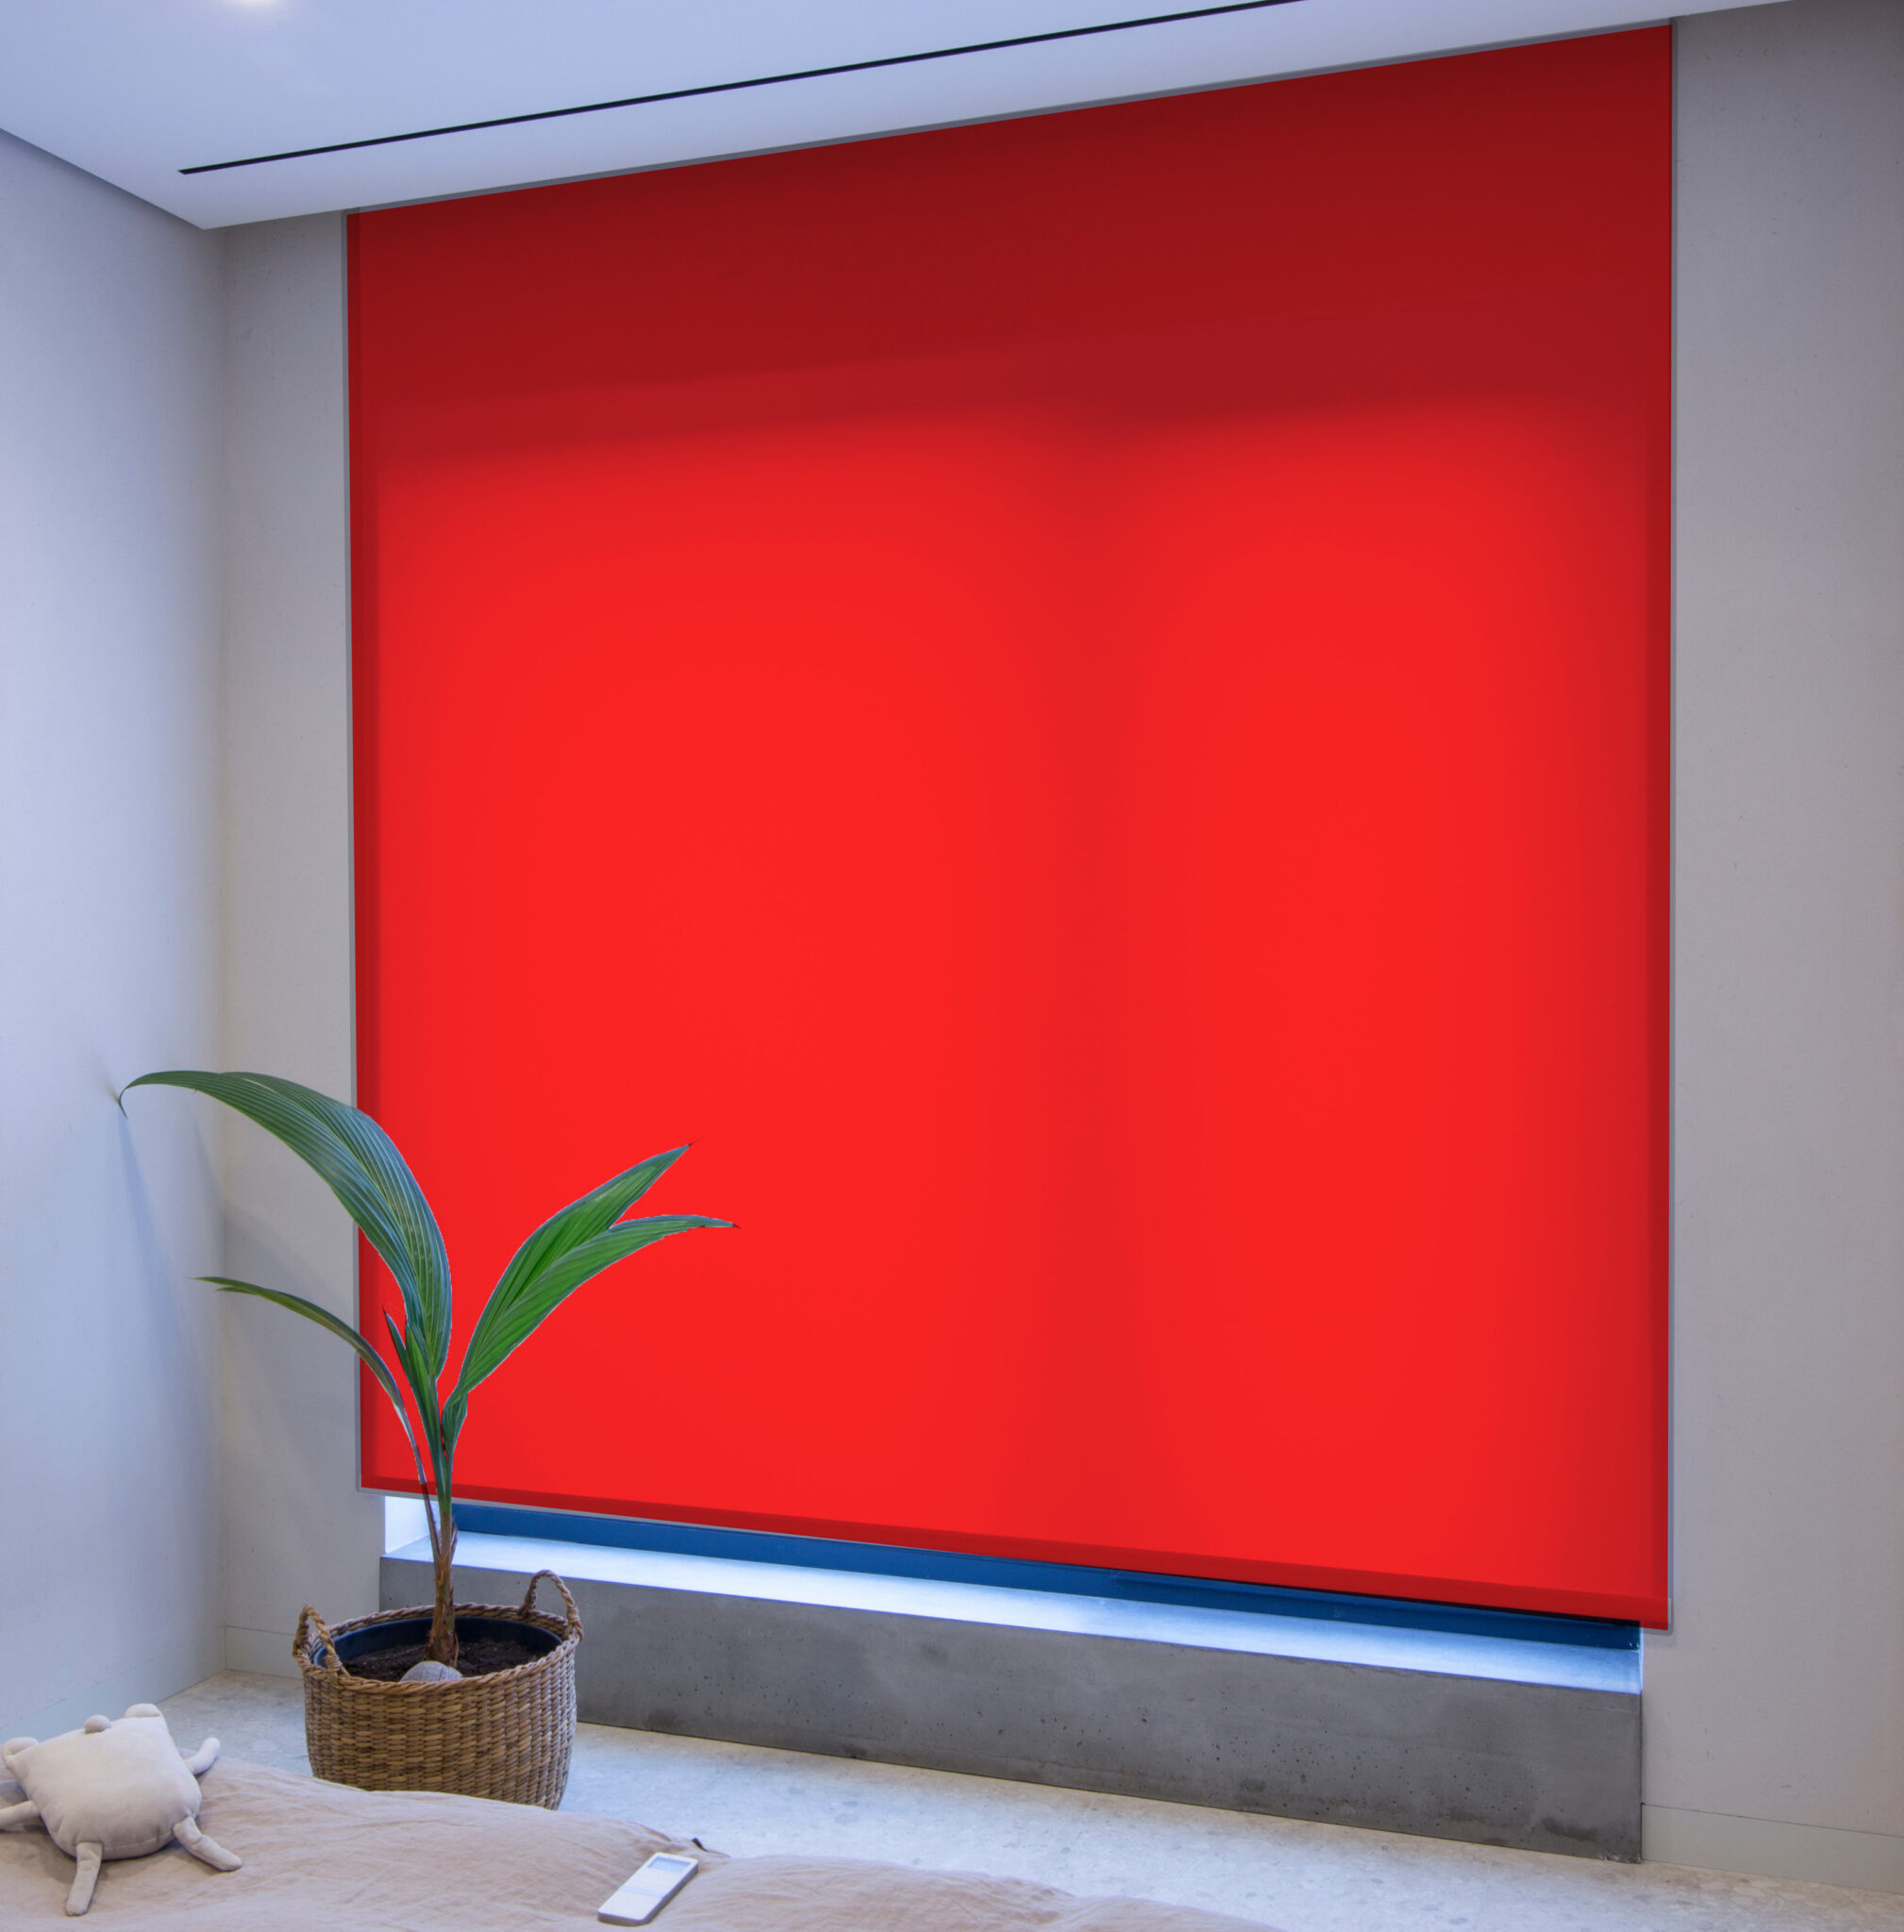 SunDeal® Rollo in Rot nach Maß | max. Breite 140cm | max. Höhe 190cm